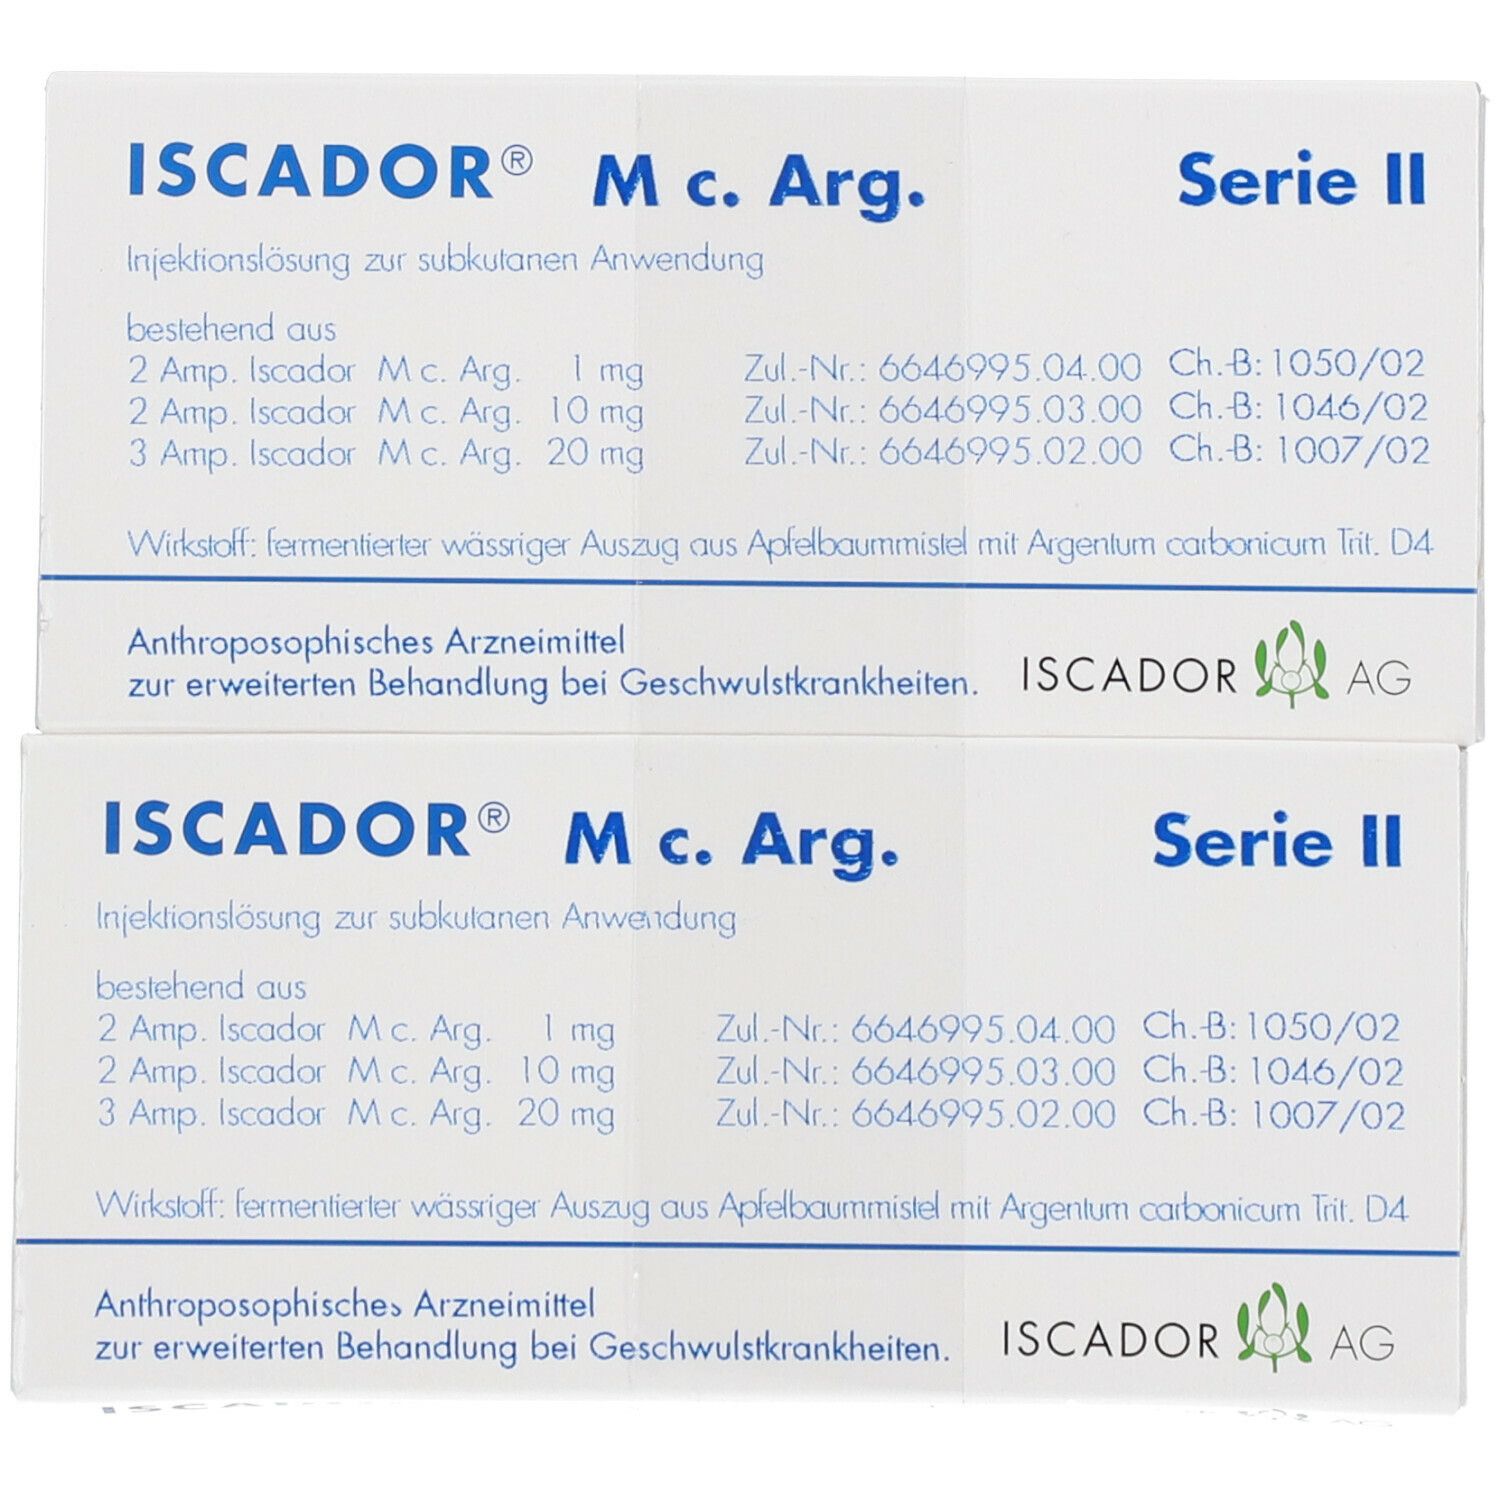 ISCADOR® M c. Arg. Serie II